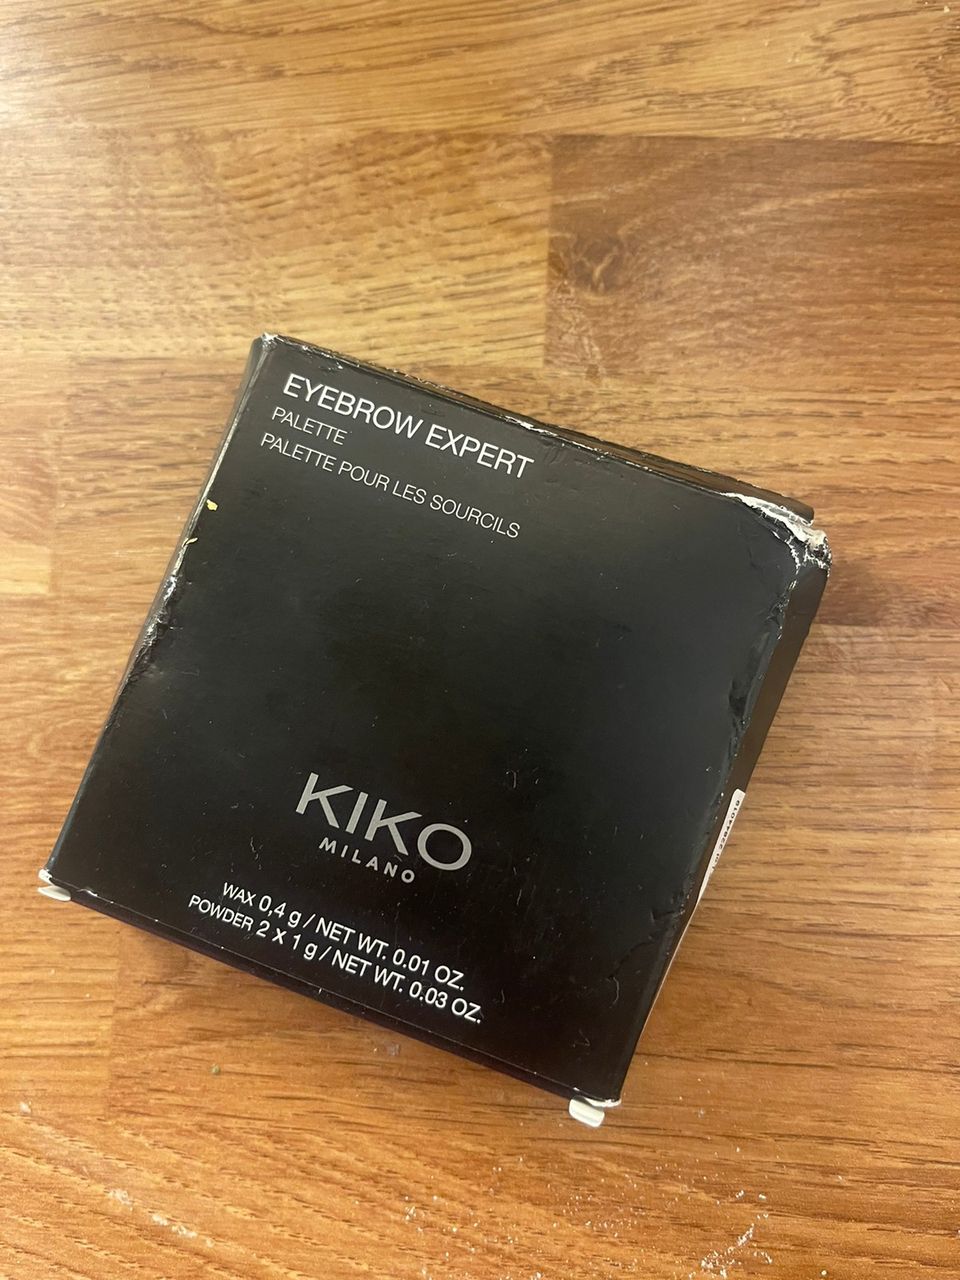 KIKO brand eyebrow palette